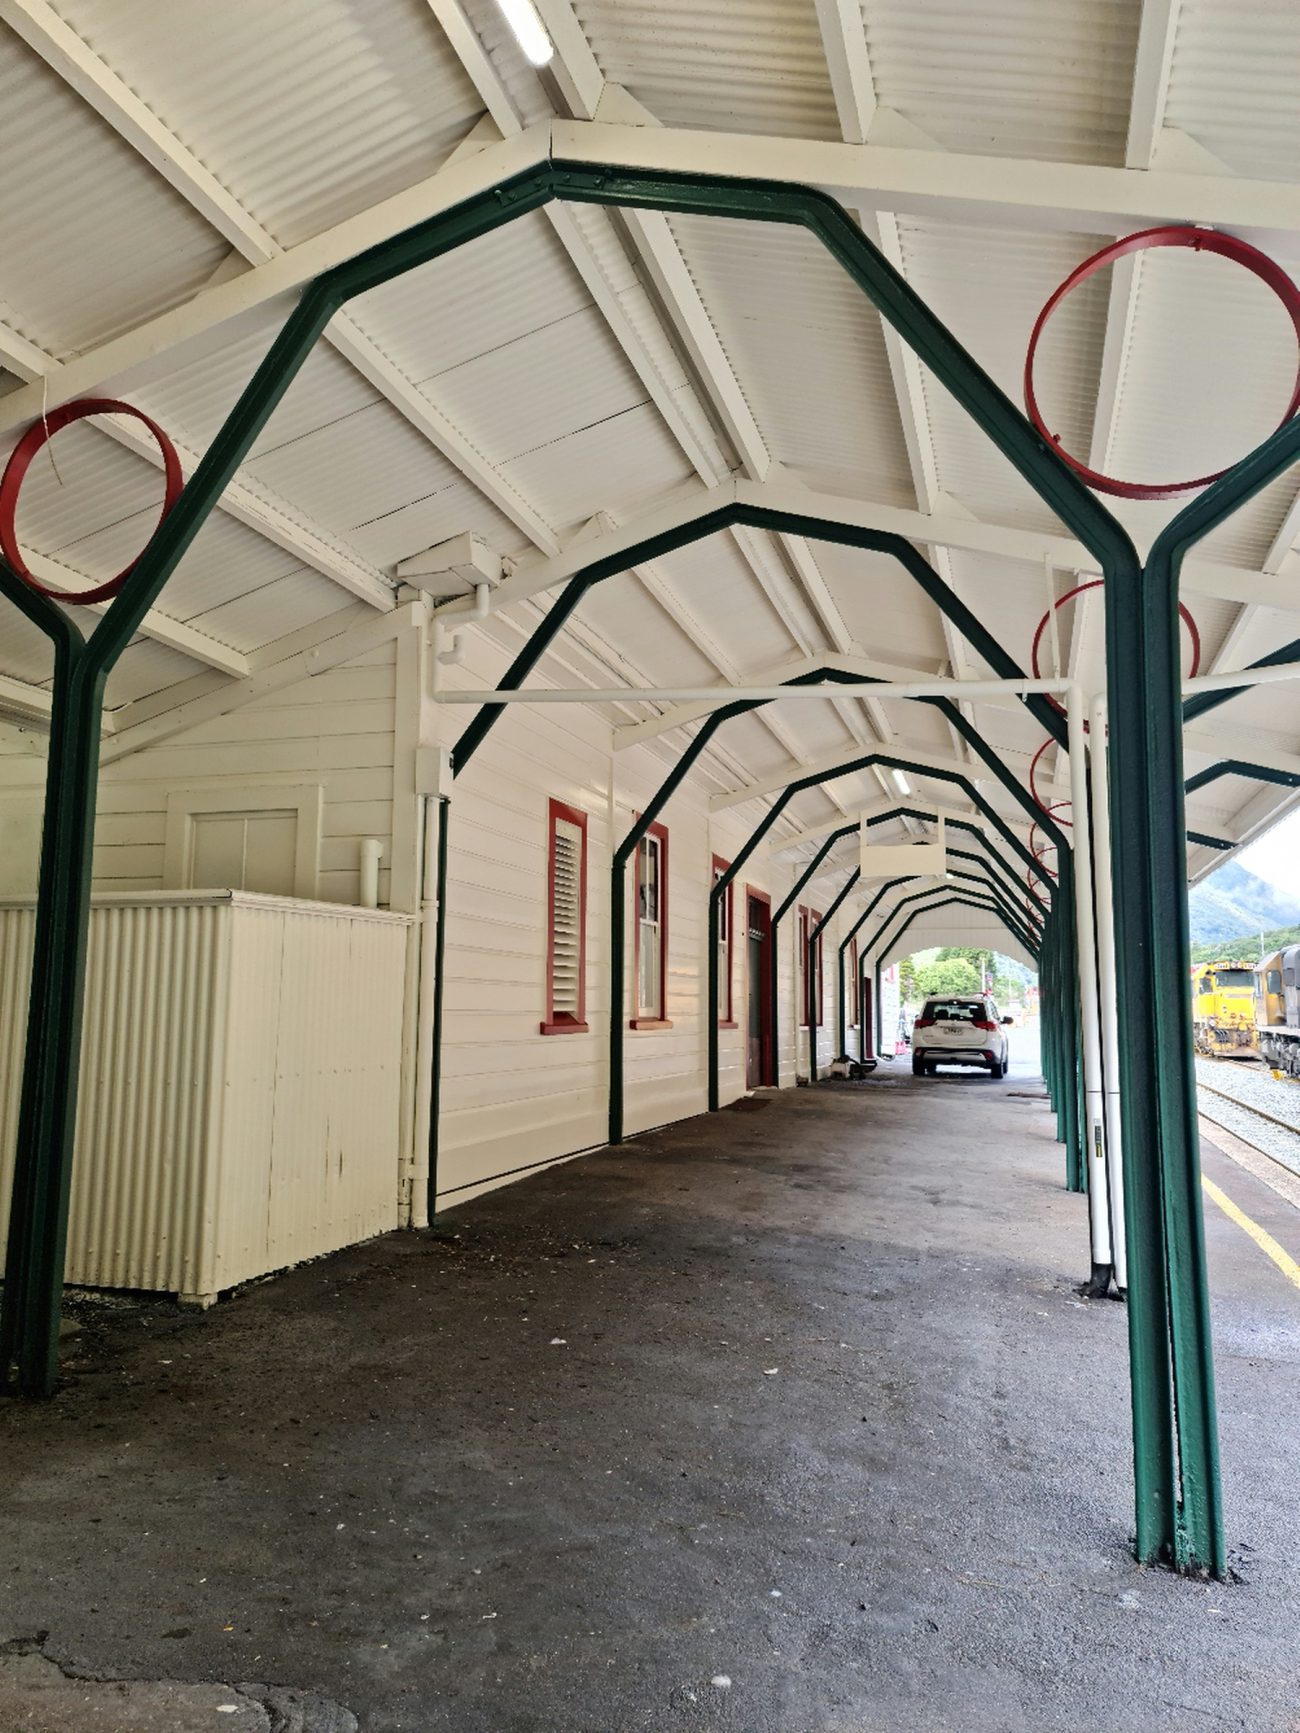 Otira Railway station spick and span for Centennial